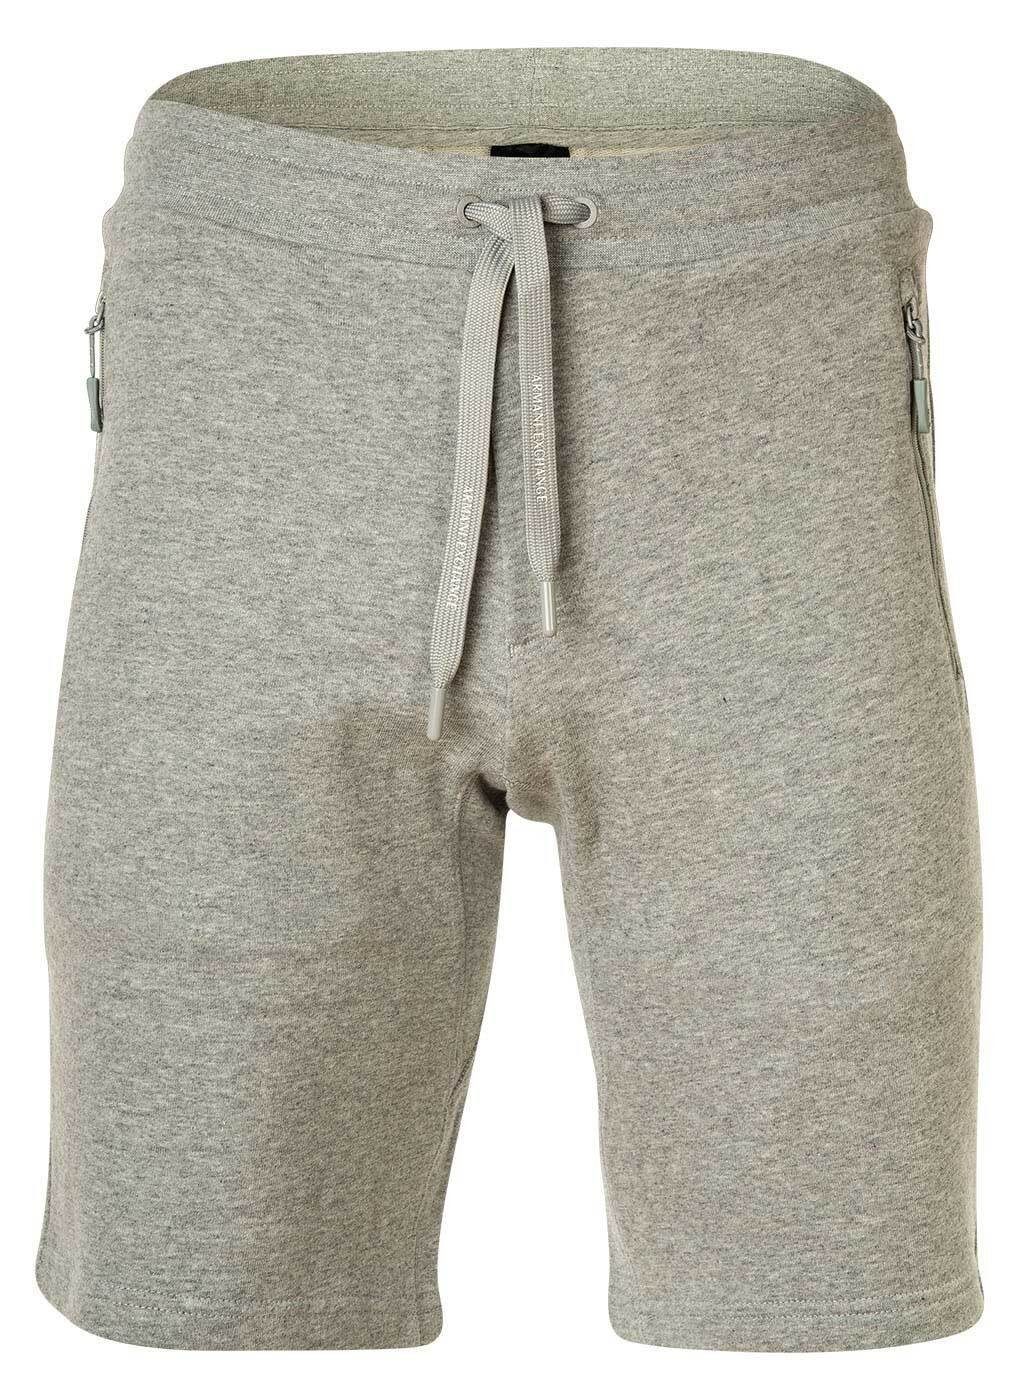 ARMANI EXCHANGE Sweatshorts Herren Jogginghose - Loungewear Pants, kurz Grau